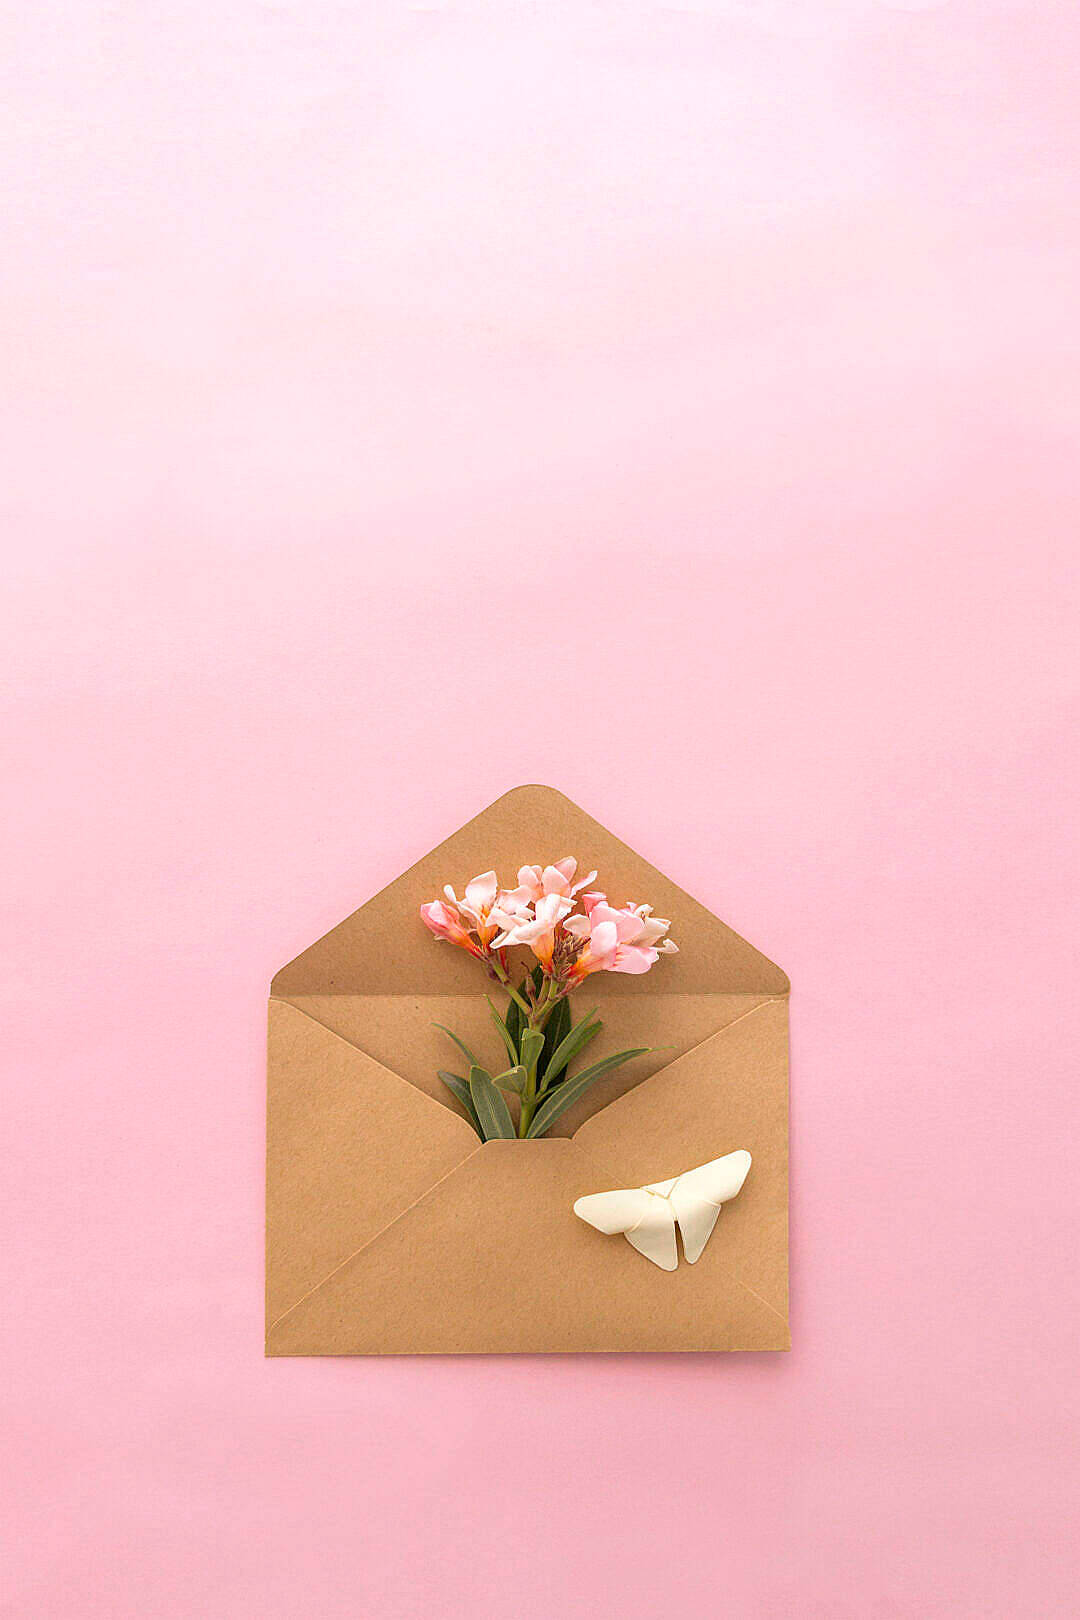 Natural Flower In An Envelope Wallpaper